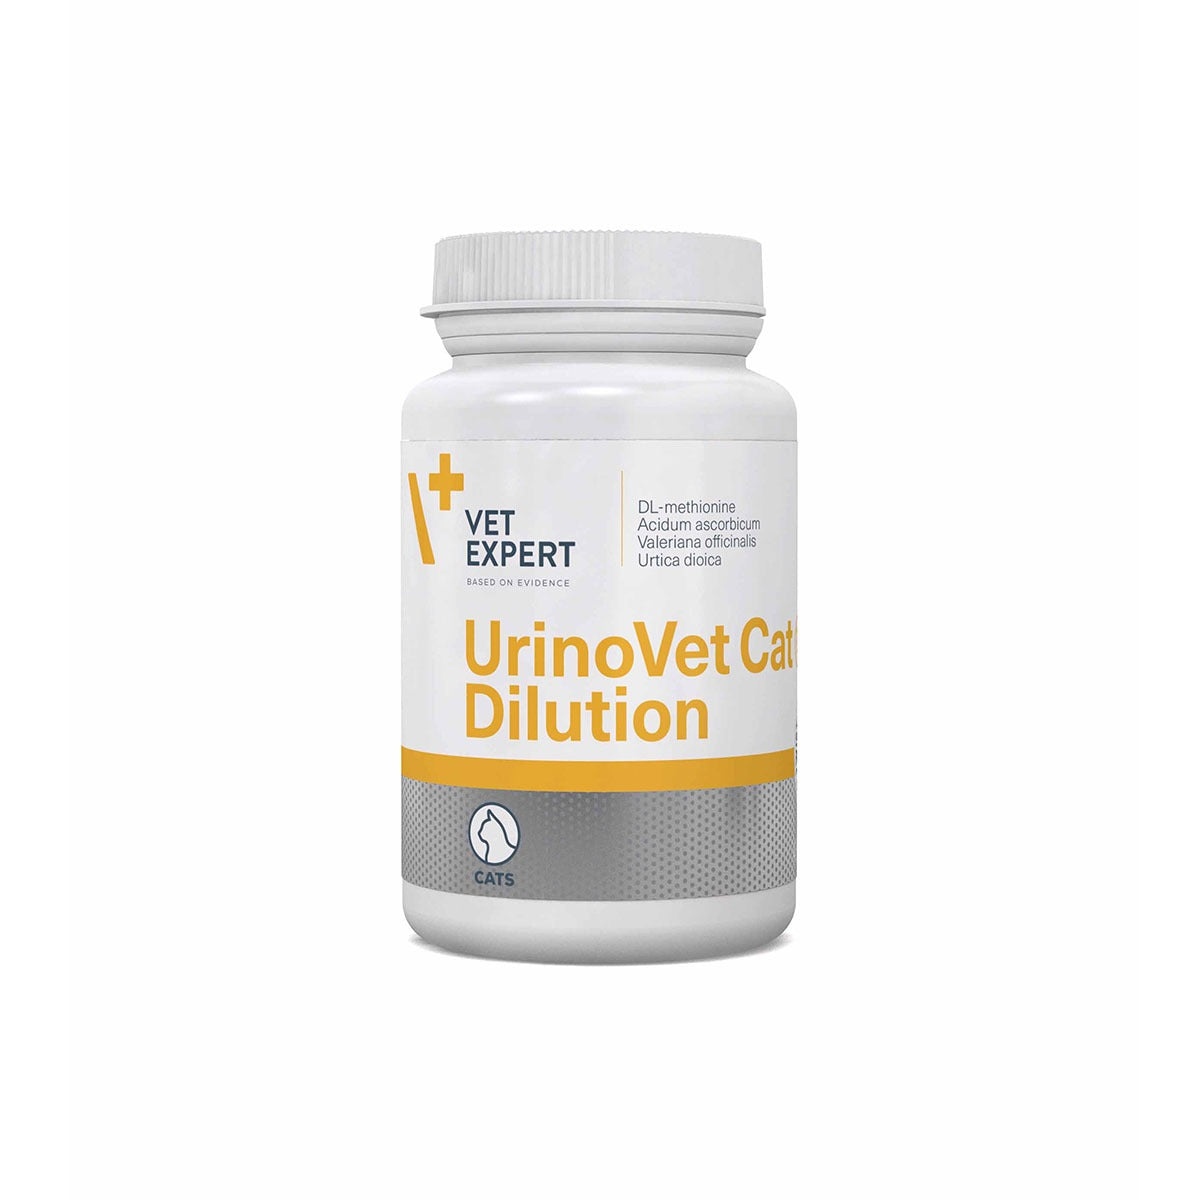 VetExpert Urinovet Cat Dilution for Cats, 45 capsules